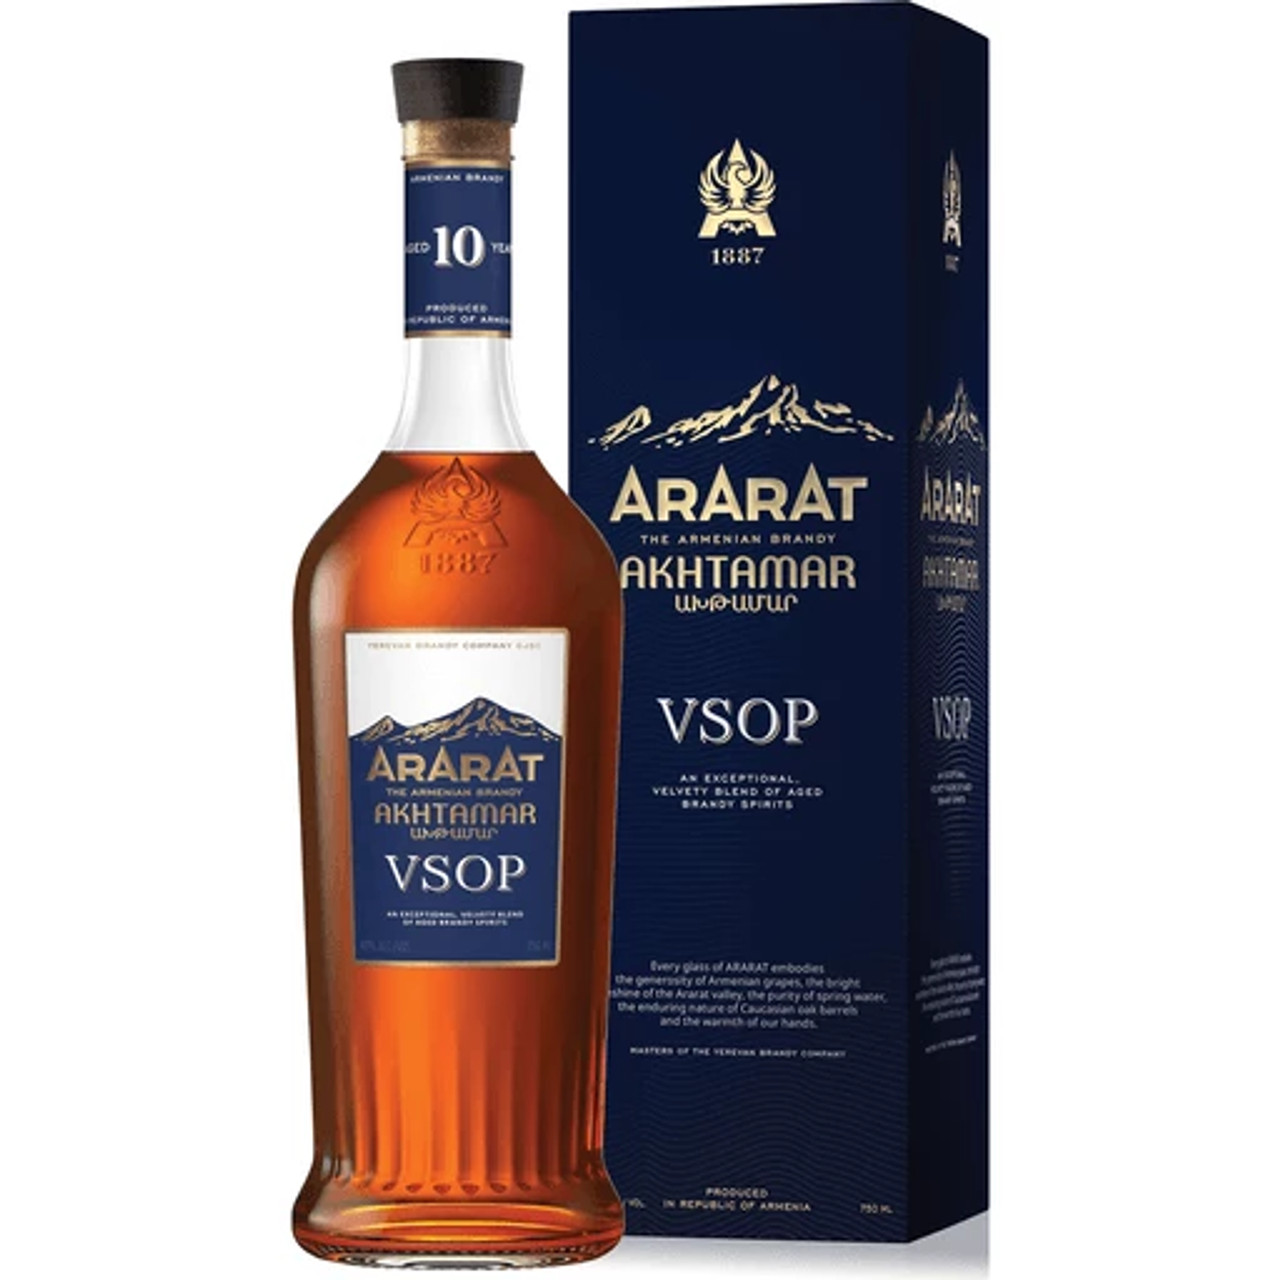 Ararat Akhtamar 10 Year Old VSOP Armenian Brandy 700mL